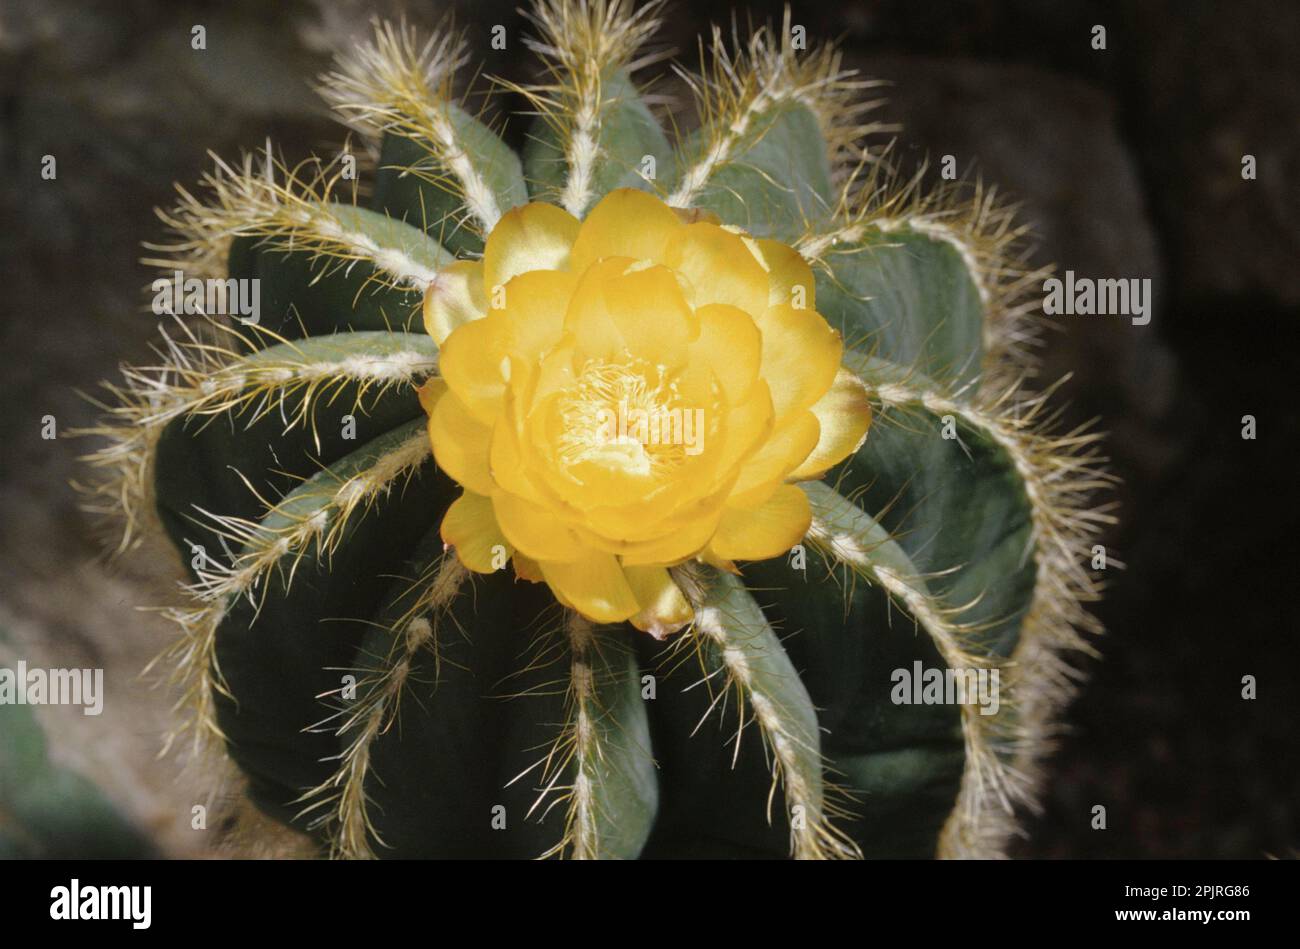 Balloon cactus (Parodia magnifica) Stock Photo